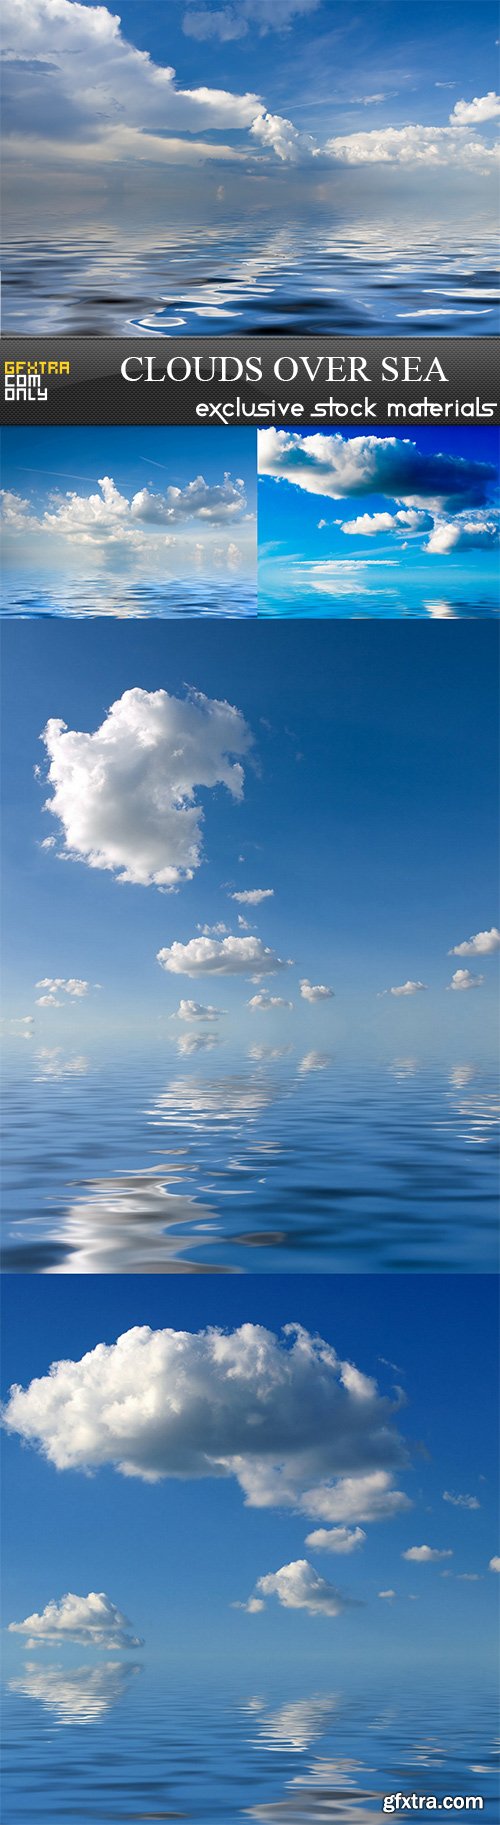 Clouds over Sea - 5 UHQ JPEG